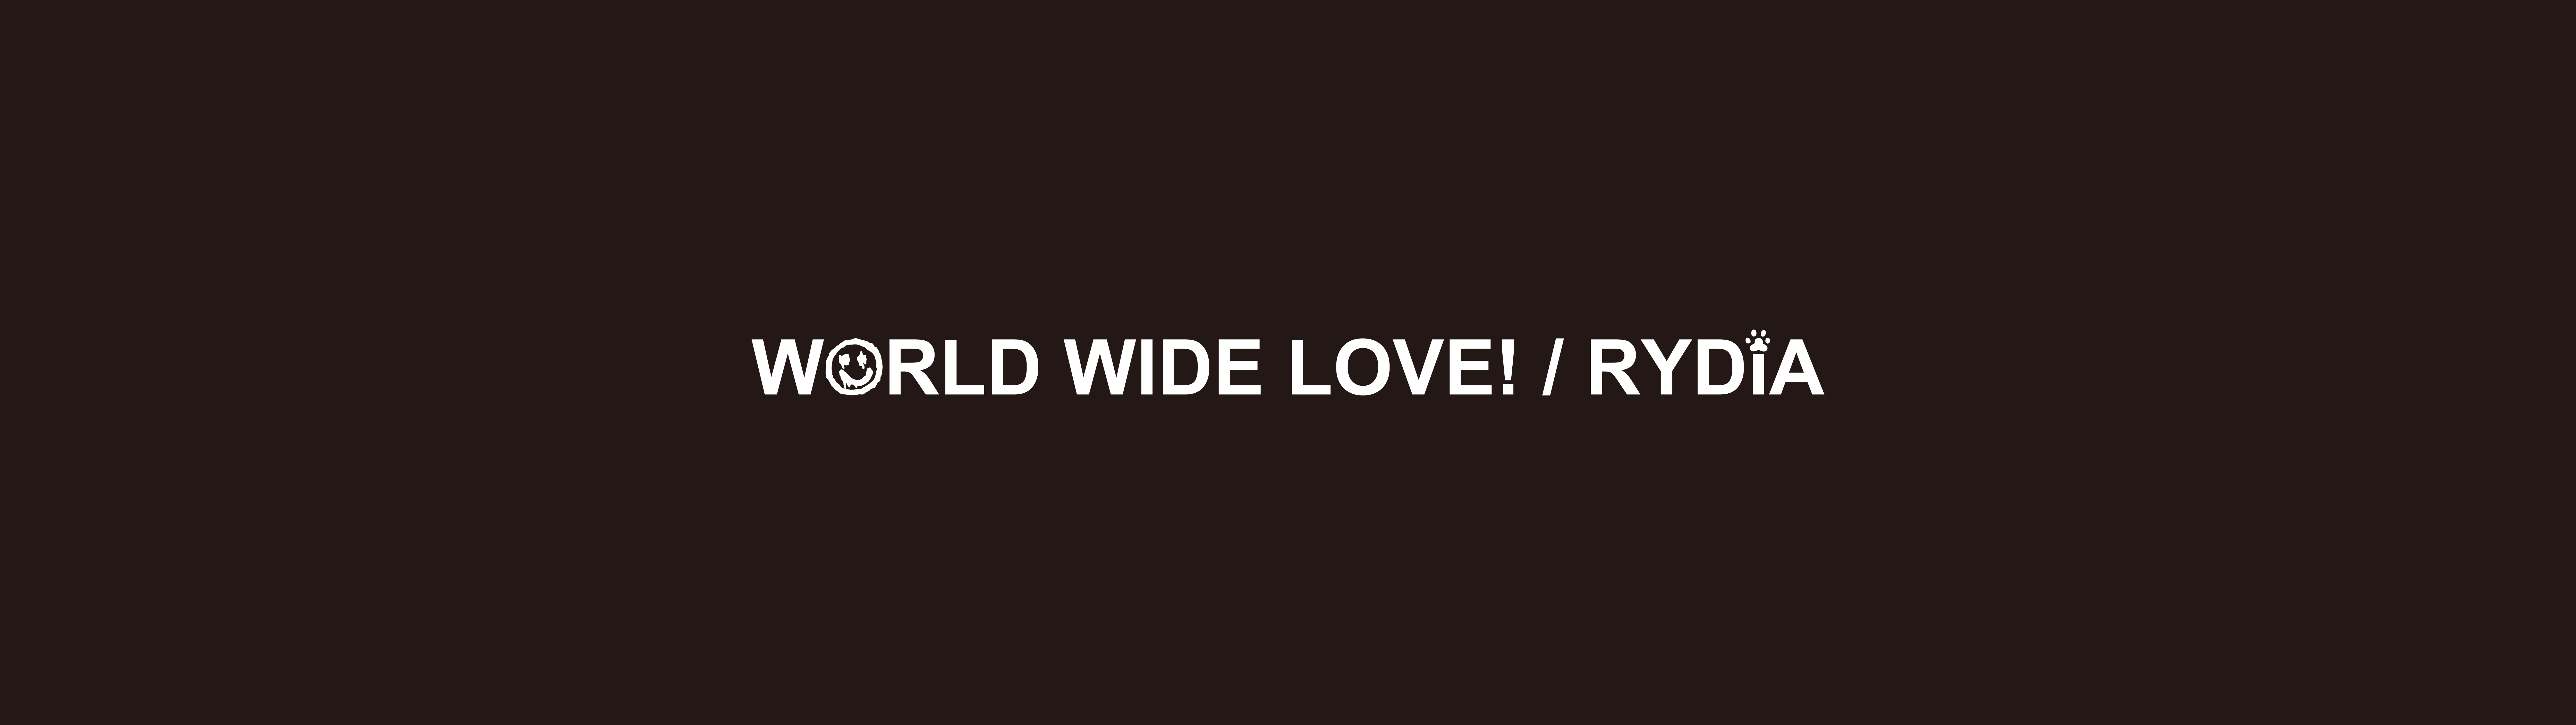 World Wide Love Rydia ワールドワイドラブ リディアの通販 Zozotown